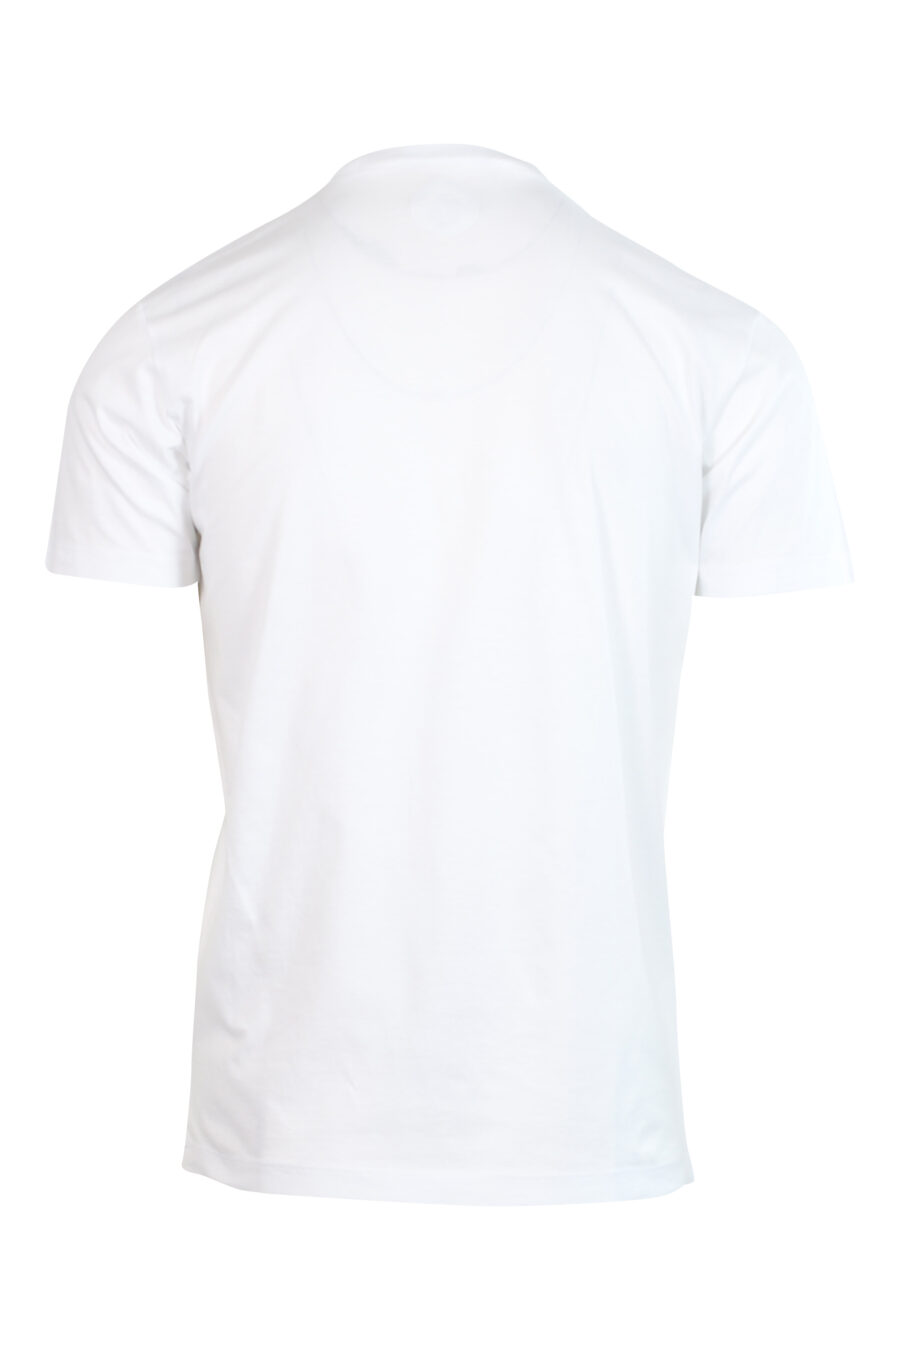 Weißes T-Shirt mit rotem Logo - 8052134945995 2